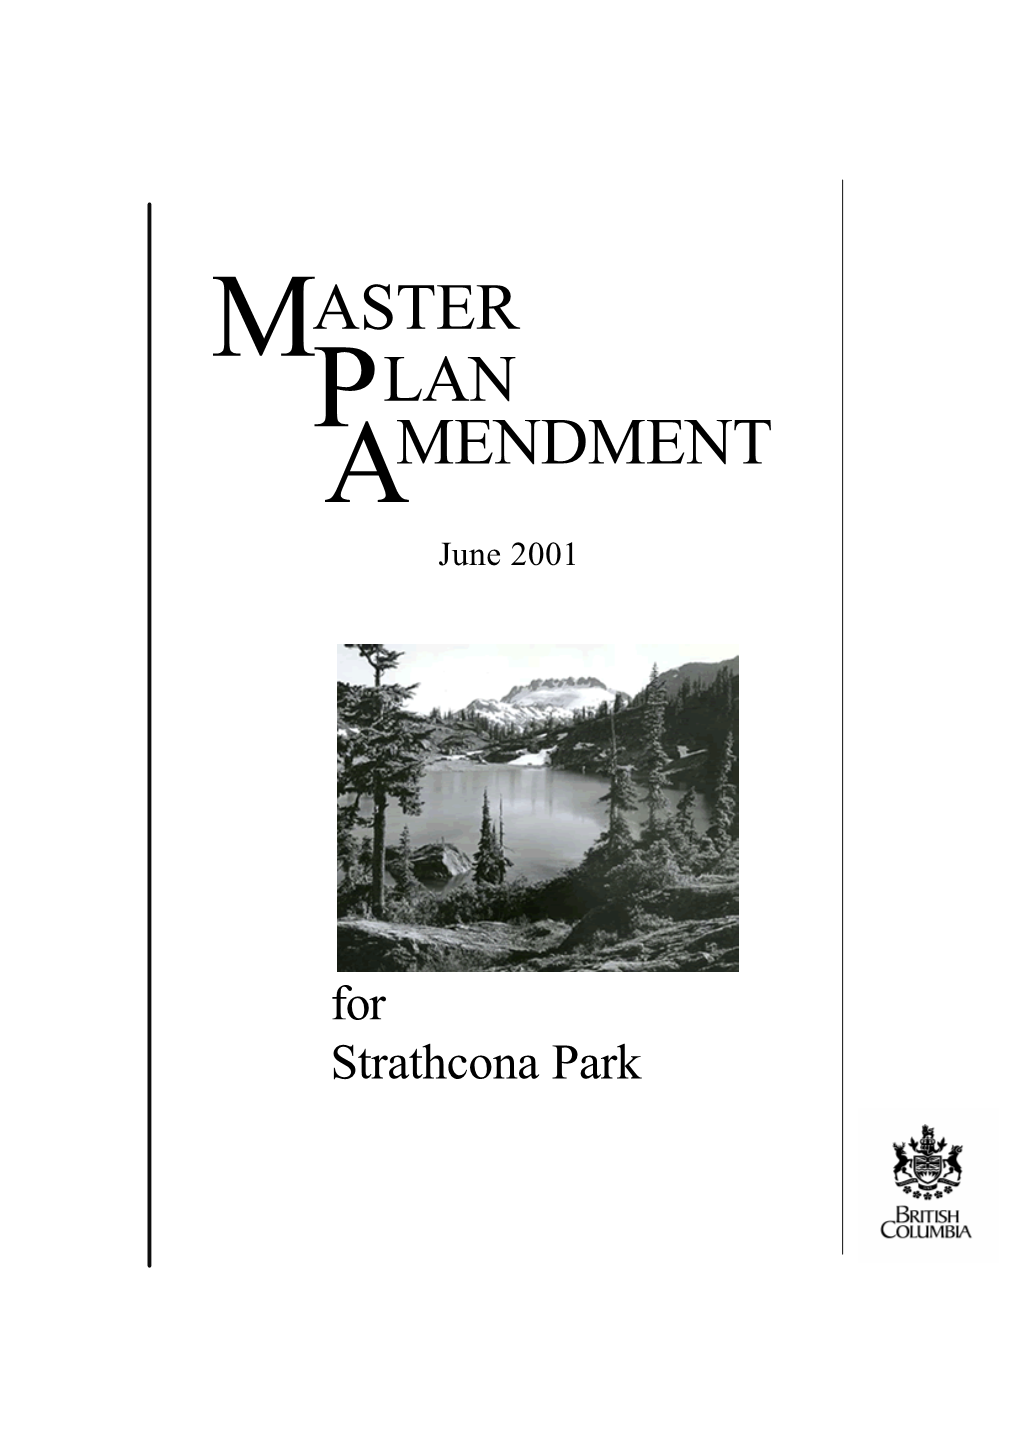 Strathcona Provincial Park MASTER LAN P MENDMENT a June 2001